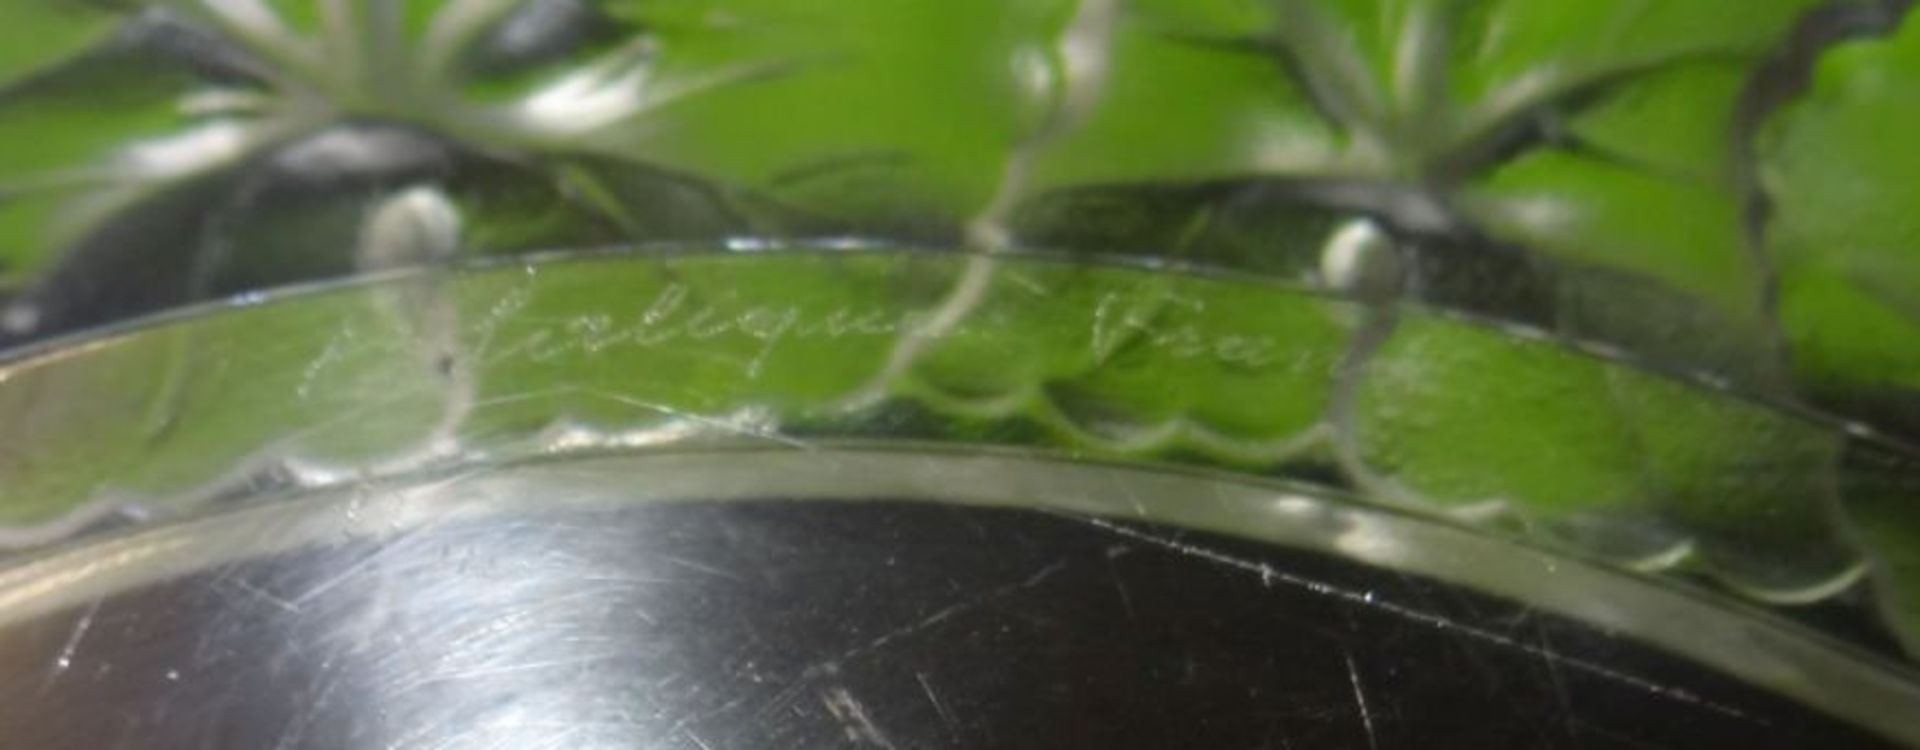 gr. runde Platte "Lalique" Ritzsignatur, D-28 cm, Alters-u. Gebrauchsspuren- - -22.61 % buyer's - Bild 5 aus 7